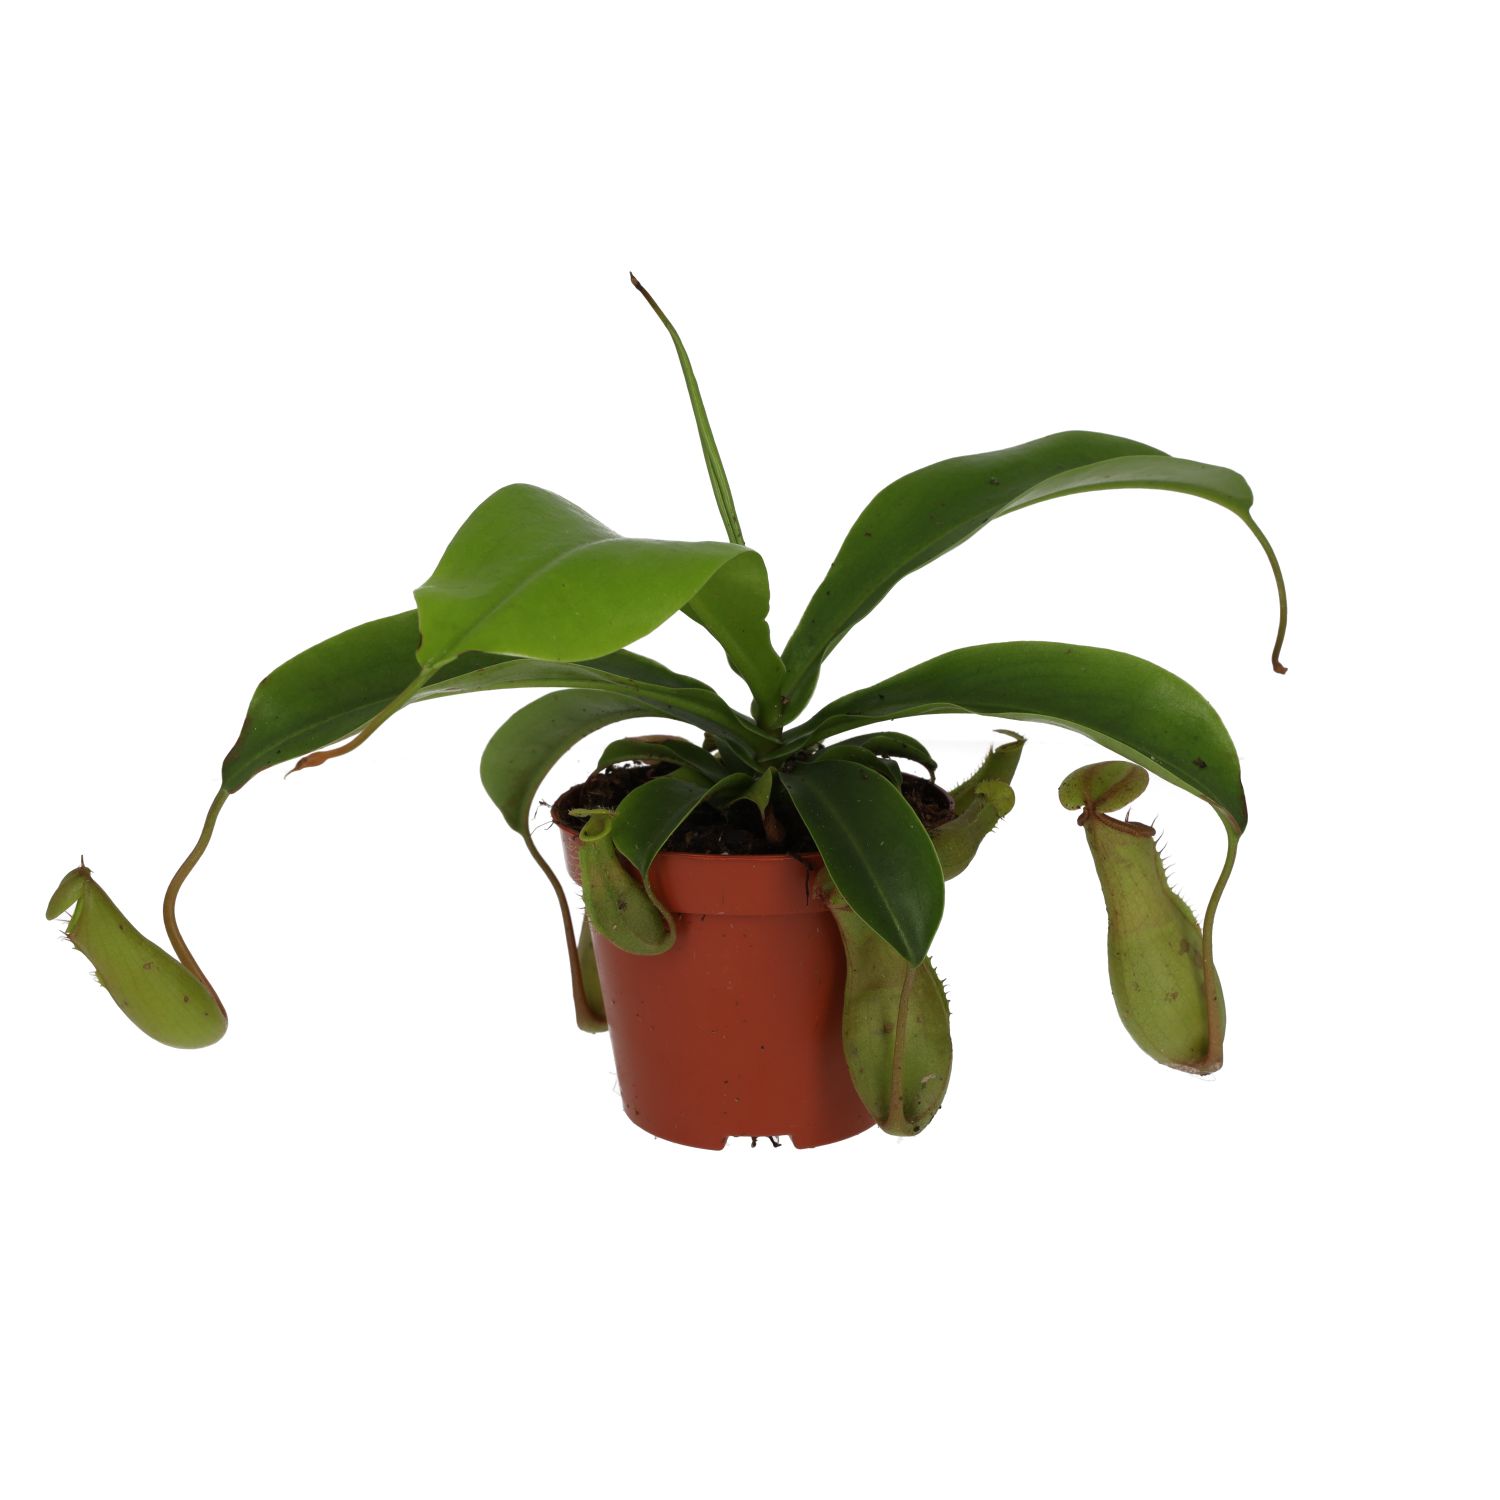 PR Live plant. Nepenthes alata (Medium)